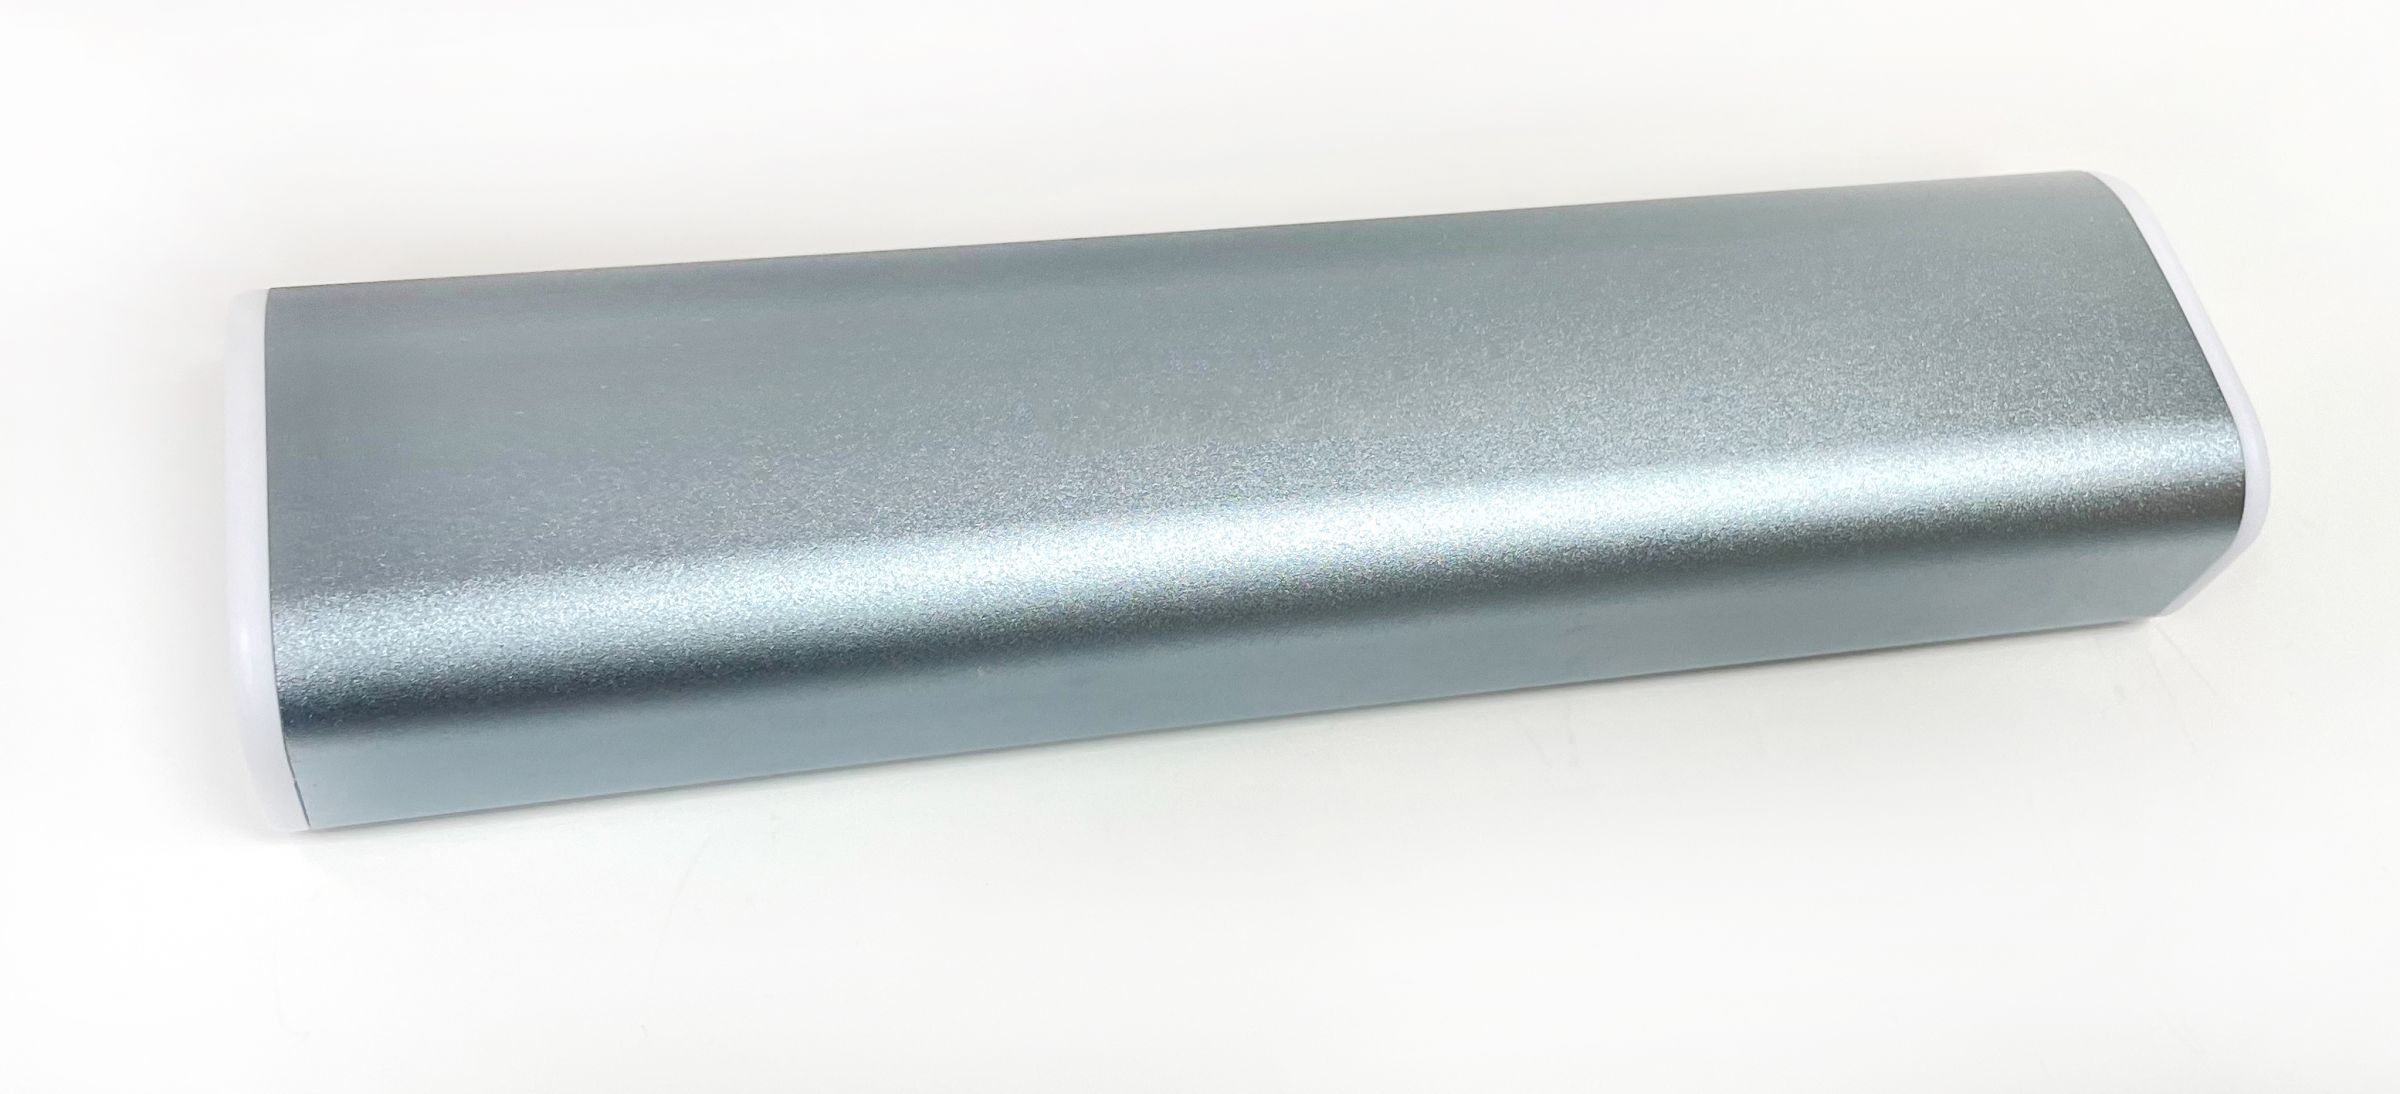 Aluminum metal portable pill box